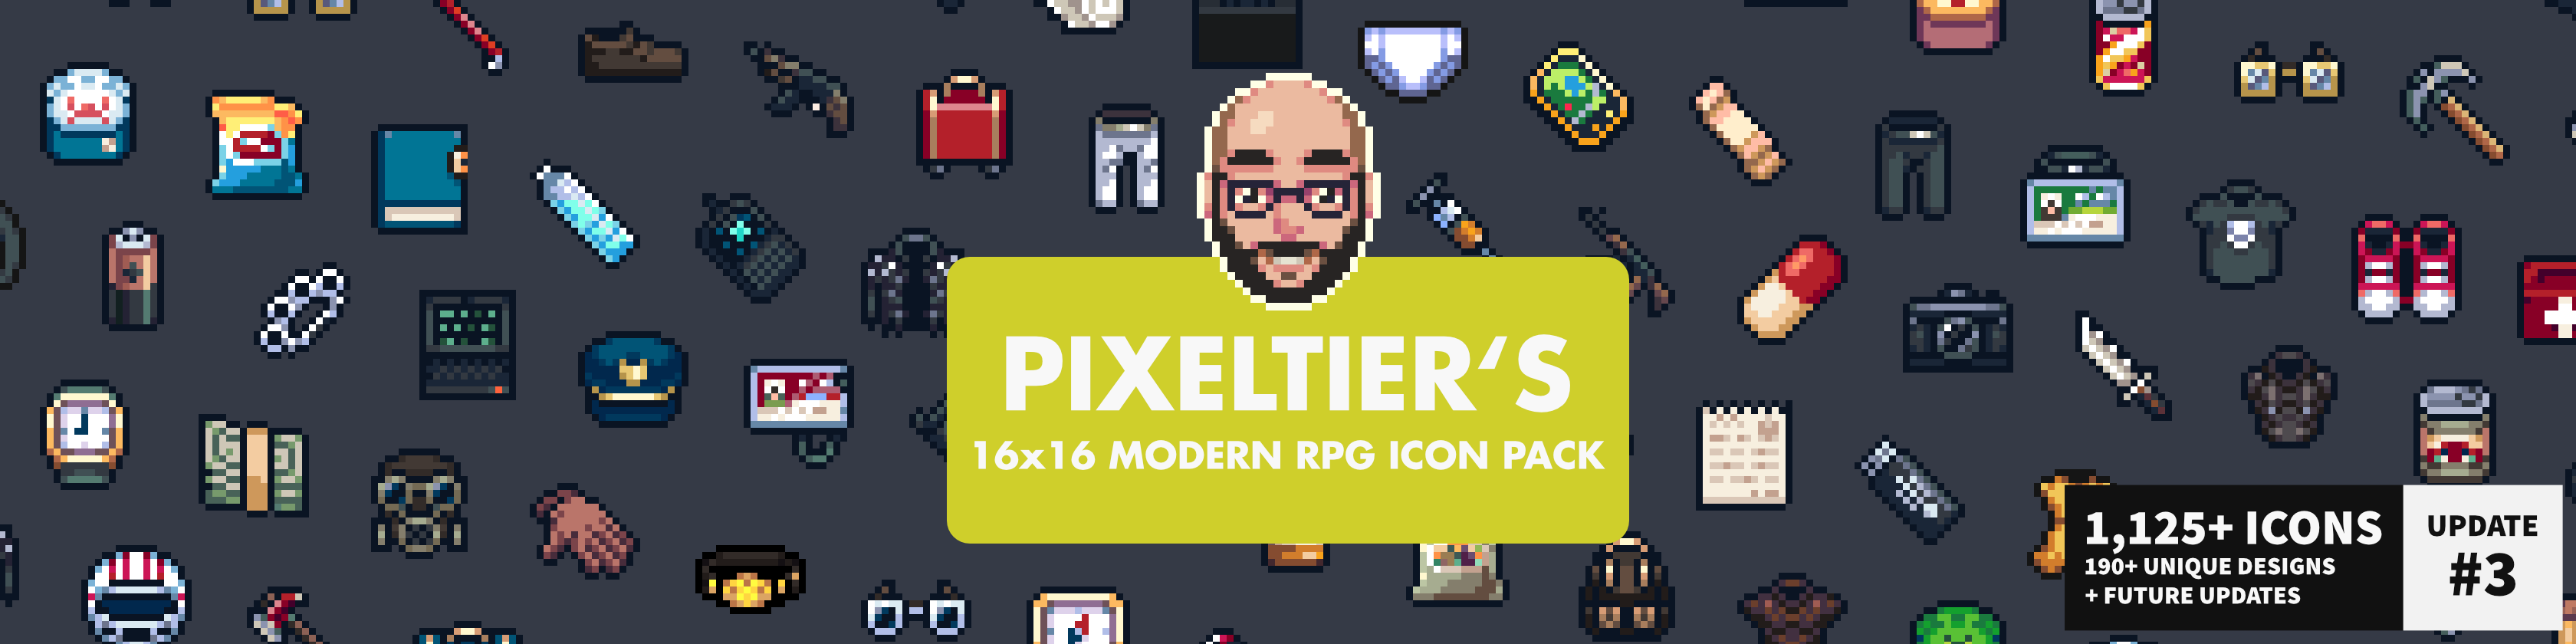 Pixeltier's 16x16 Modern RPG Icon Pack /// Pixel Art